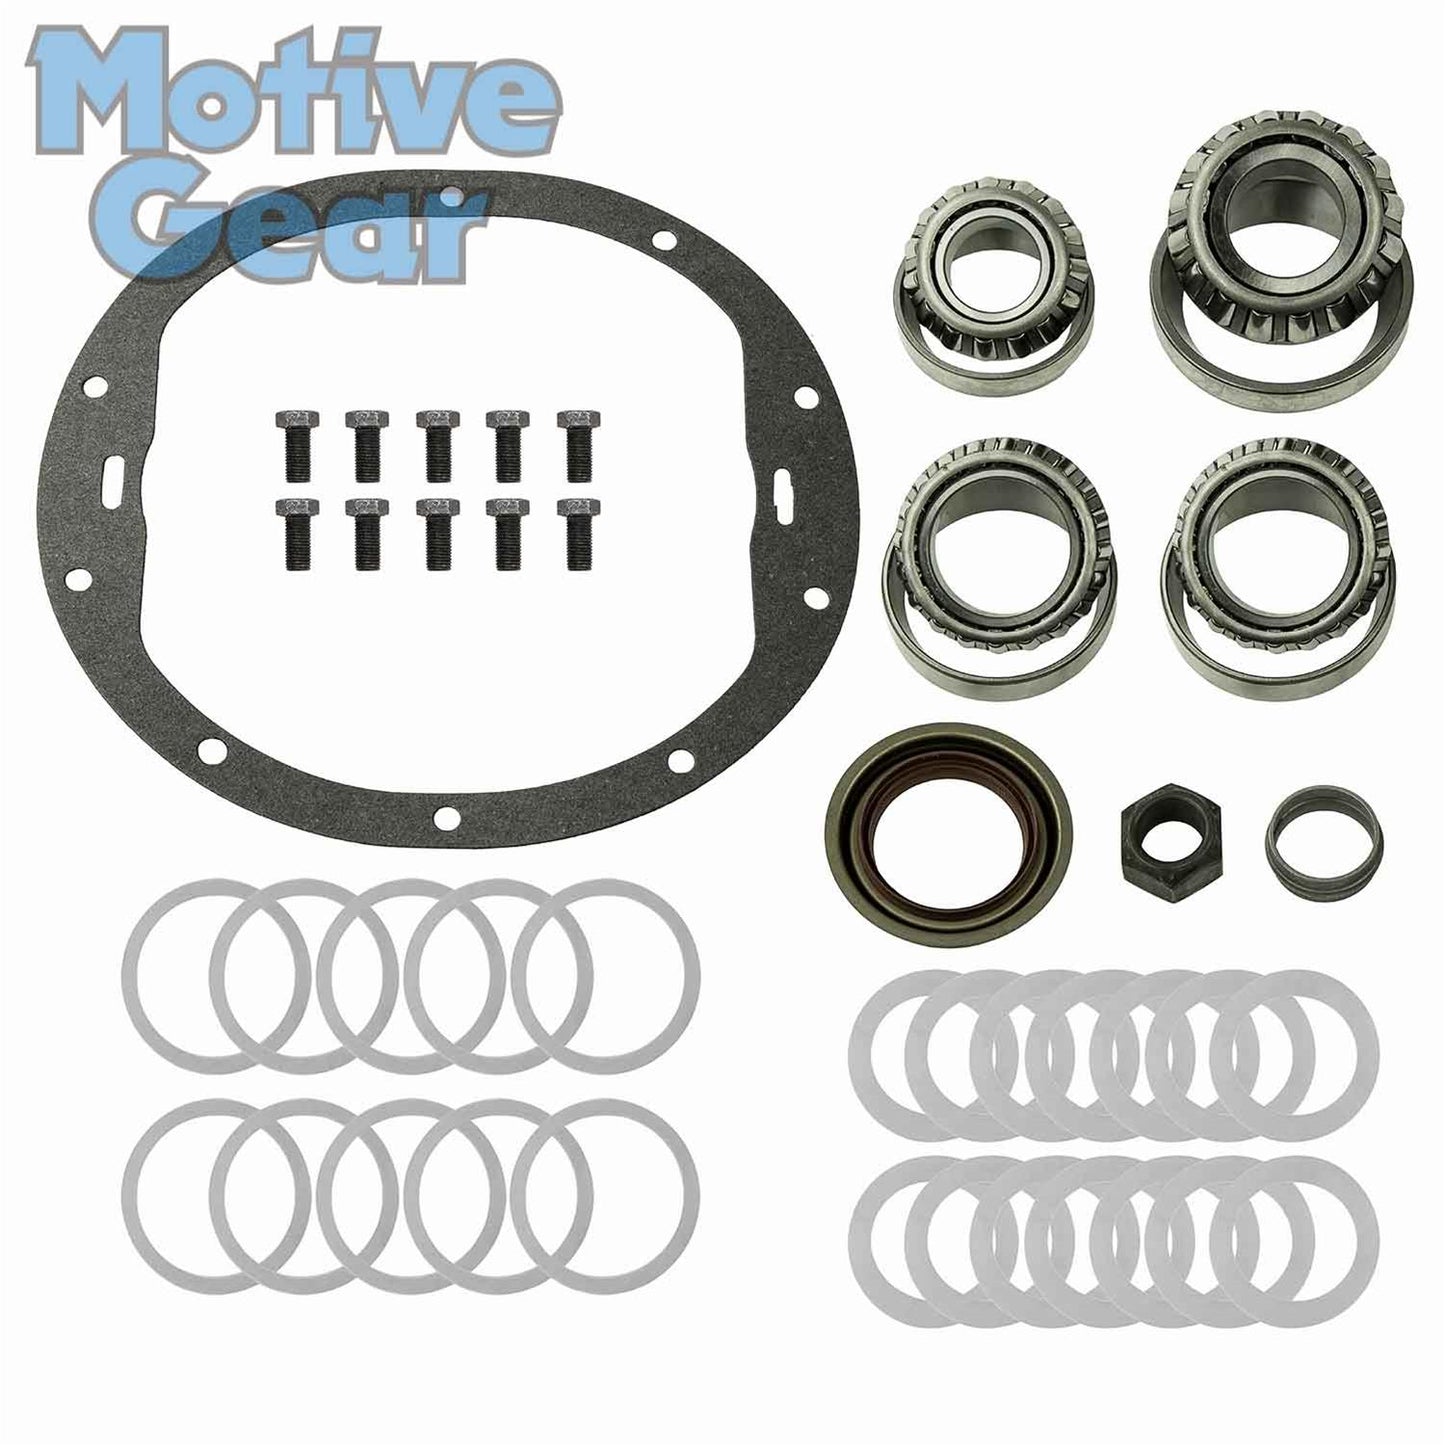 GM 8.6" 09-13 Motive Gear R10RLAMK - Motive Gear Master Ring and Pinion Installation Kits